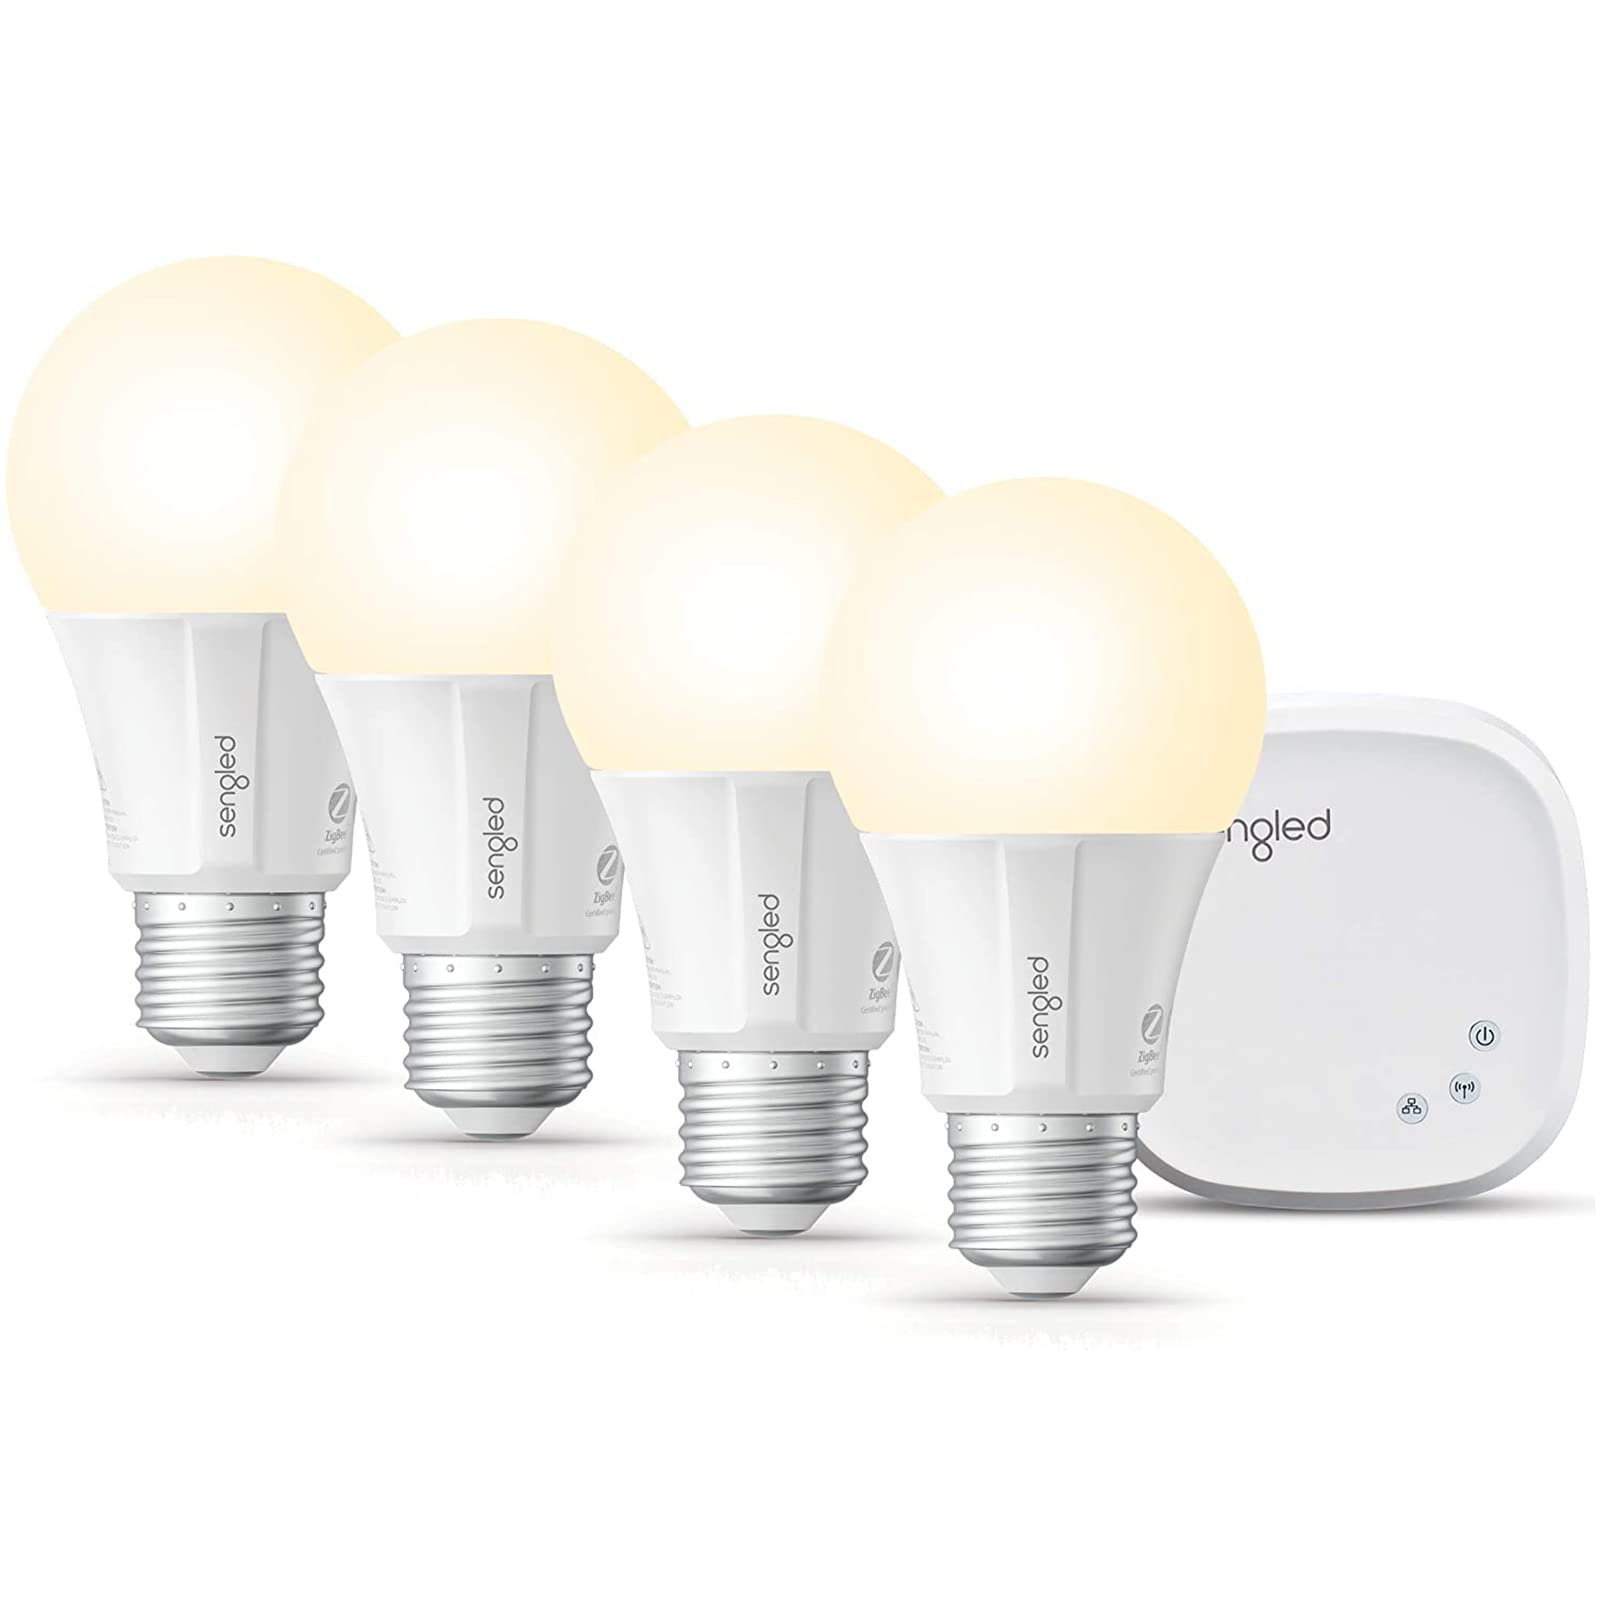 Sengled Smart Light Bulb Starter Kit, Smart Bulbs that Work with Alexa, Google Home, 2700K Soft White Alexa Light Bulbs, A19 E26 Dimmable Bulbs 800LM, 9 (60W Equivalent), 4 Bulbs with Hub, New